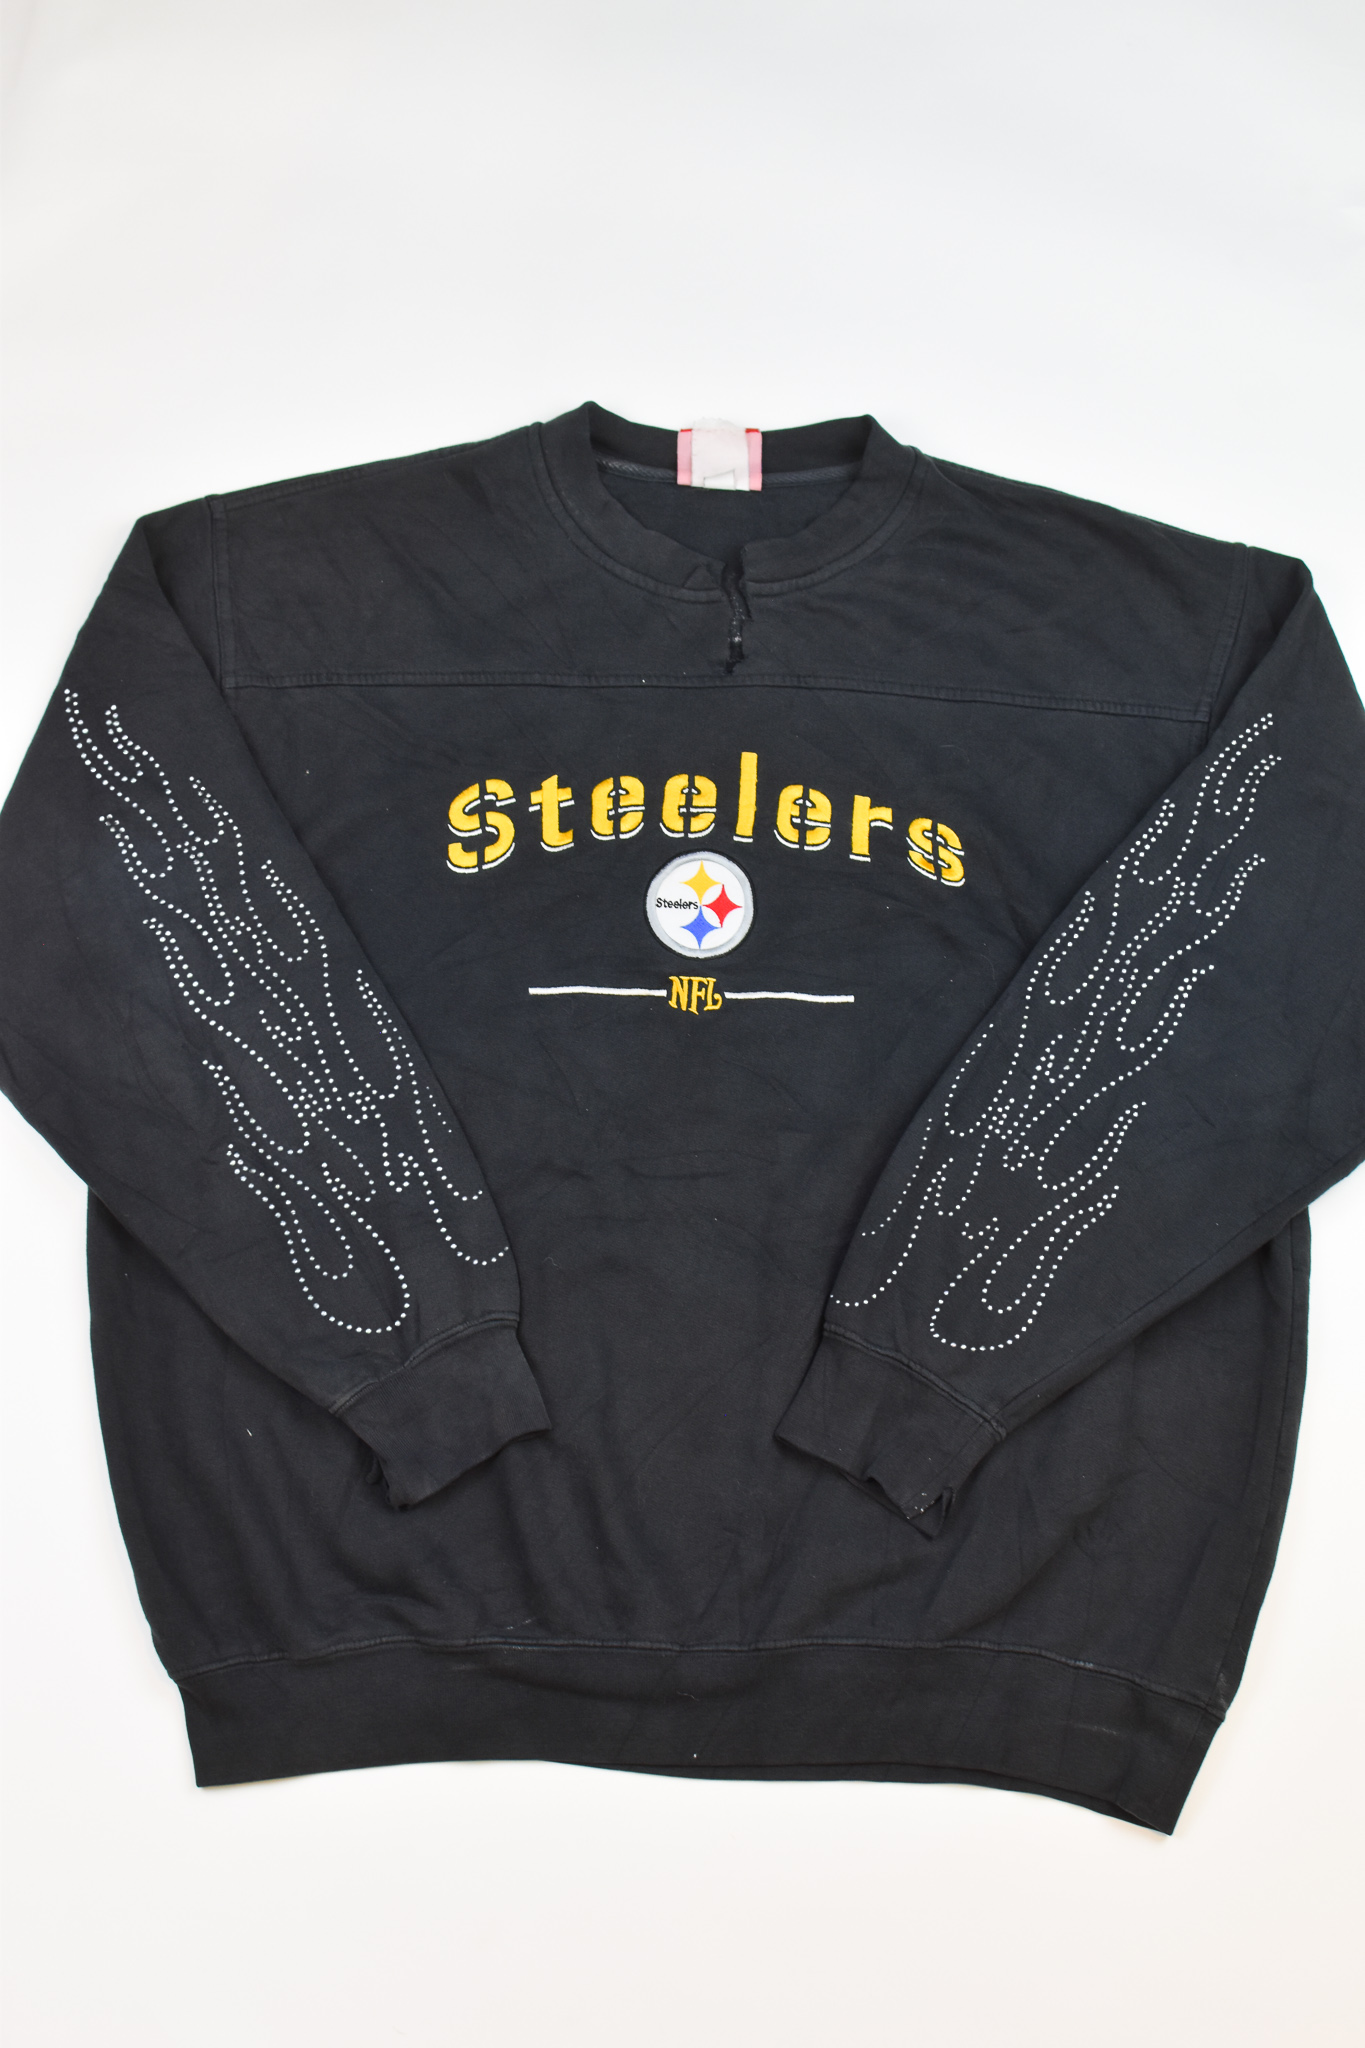 Upcycled Vintage Steelers Flame Sweatshirt